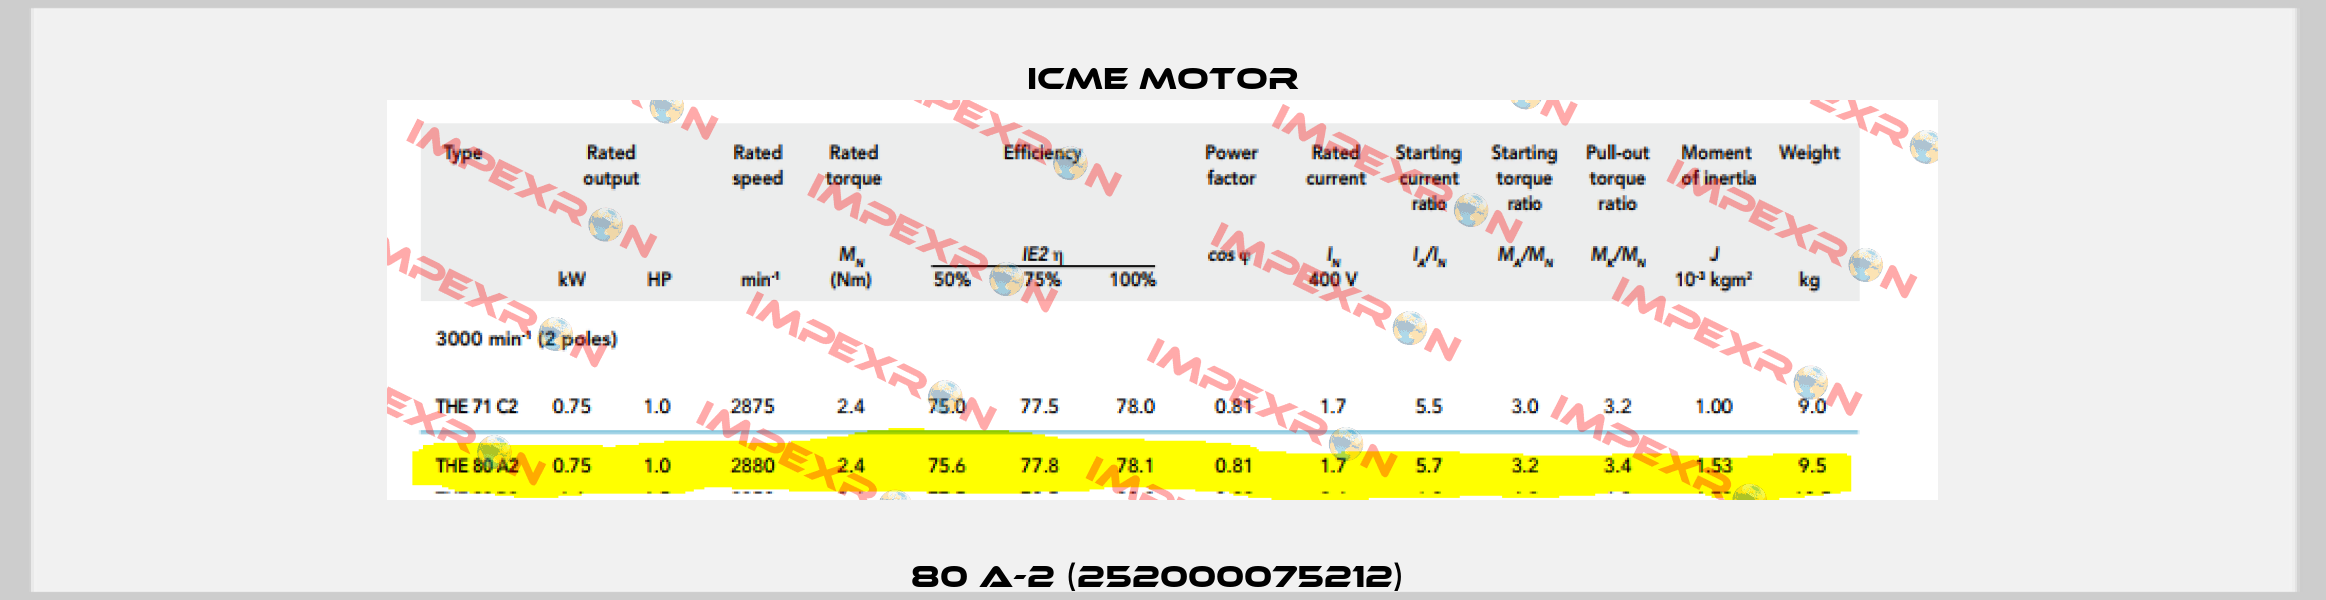 80 A-2 (252000075212)  Icme Motor